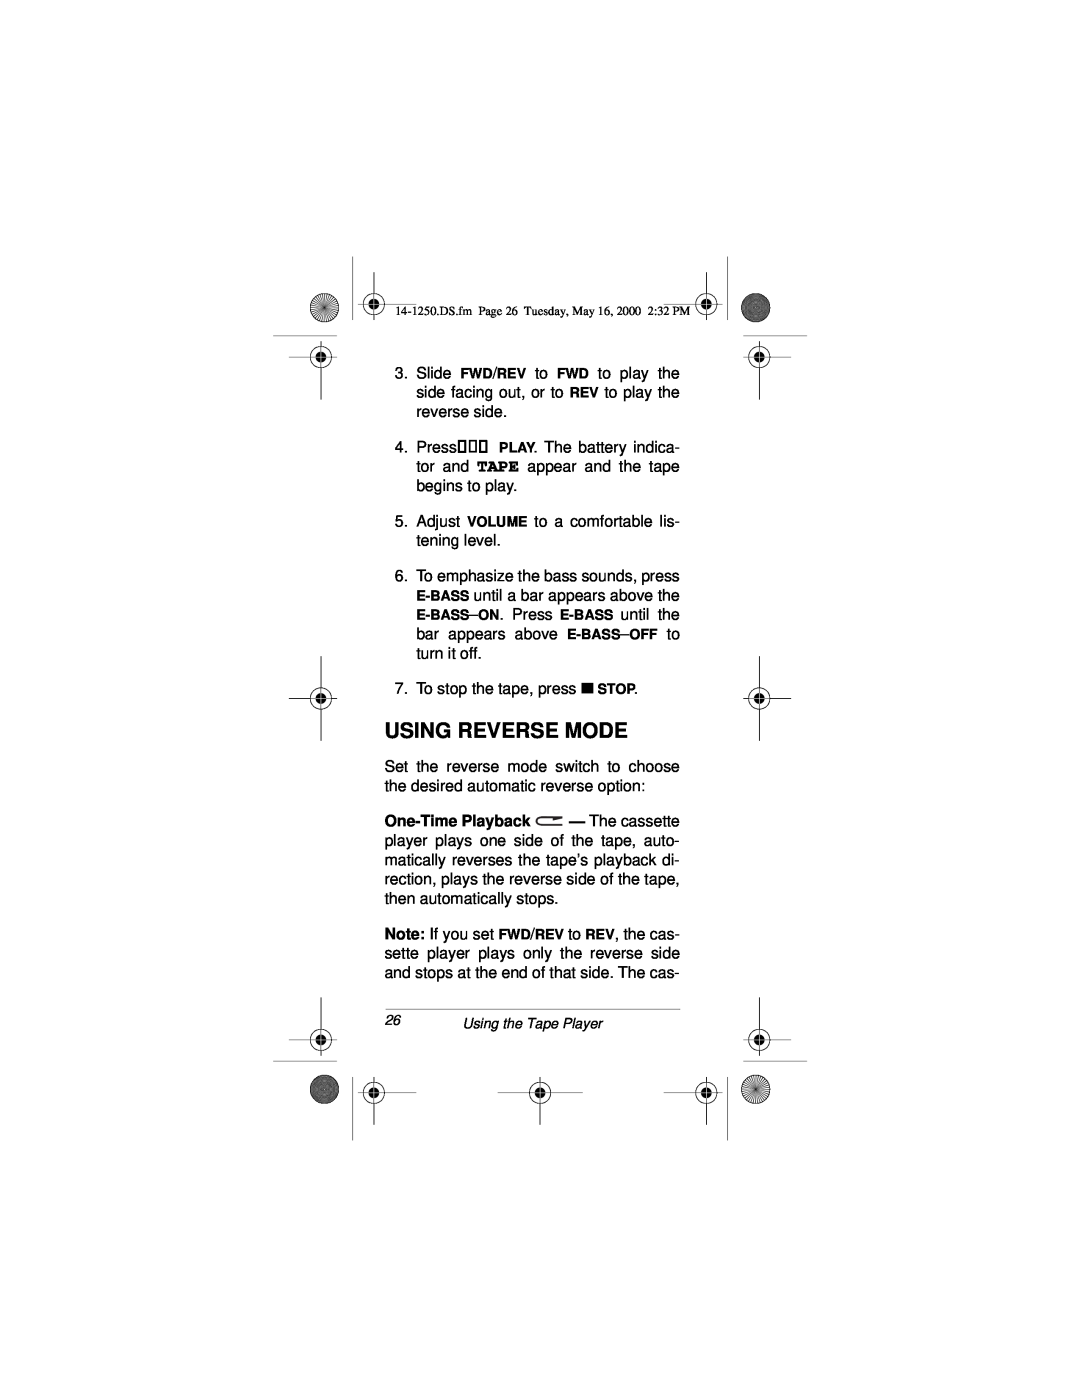 Radio Shack SCP-107 owner manual Using Reverse Mode 